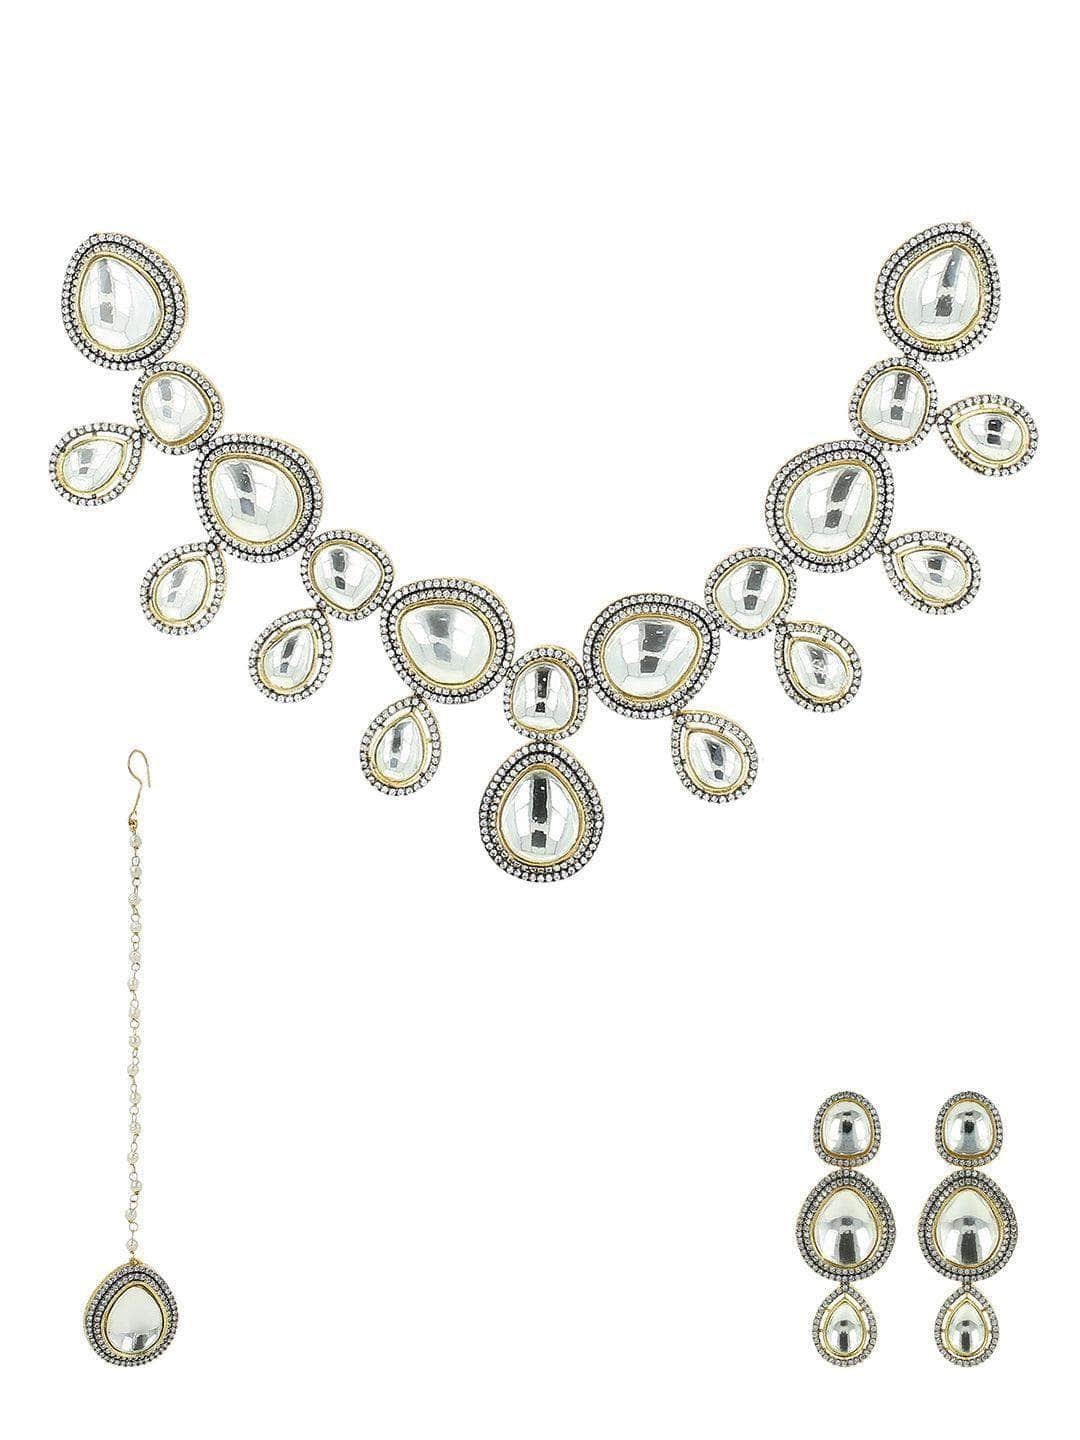 Ishhaara Victorian AD polki kundan necklace set